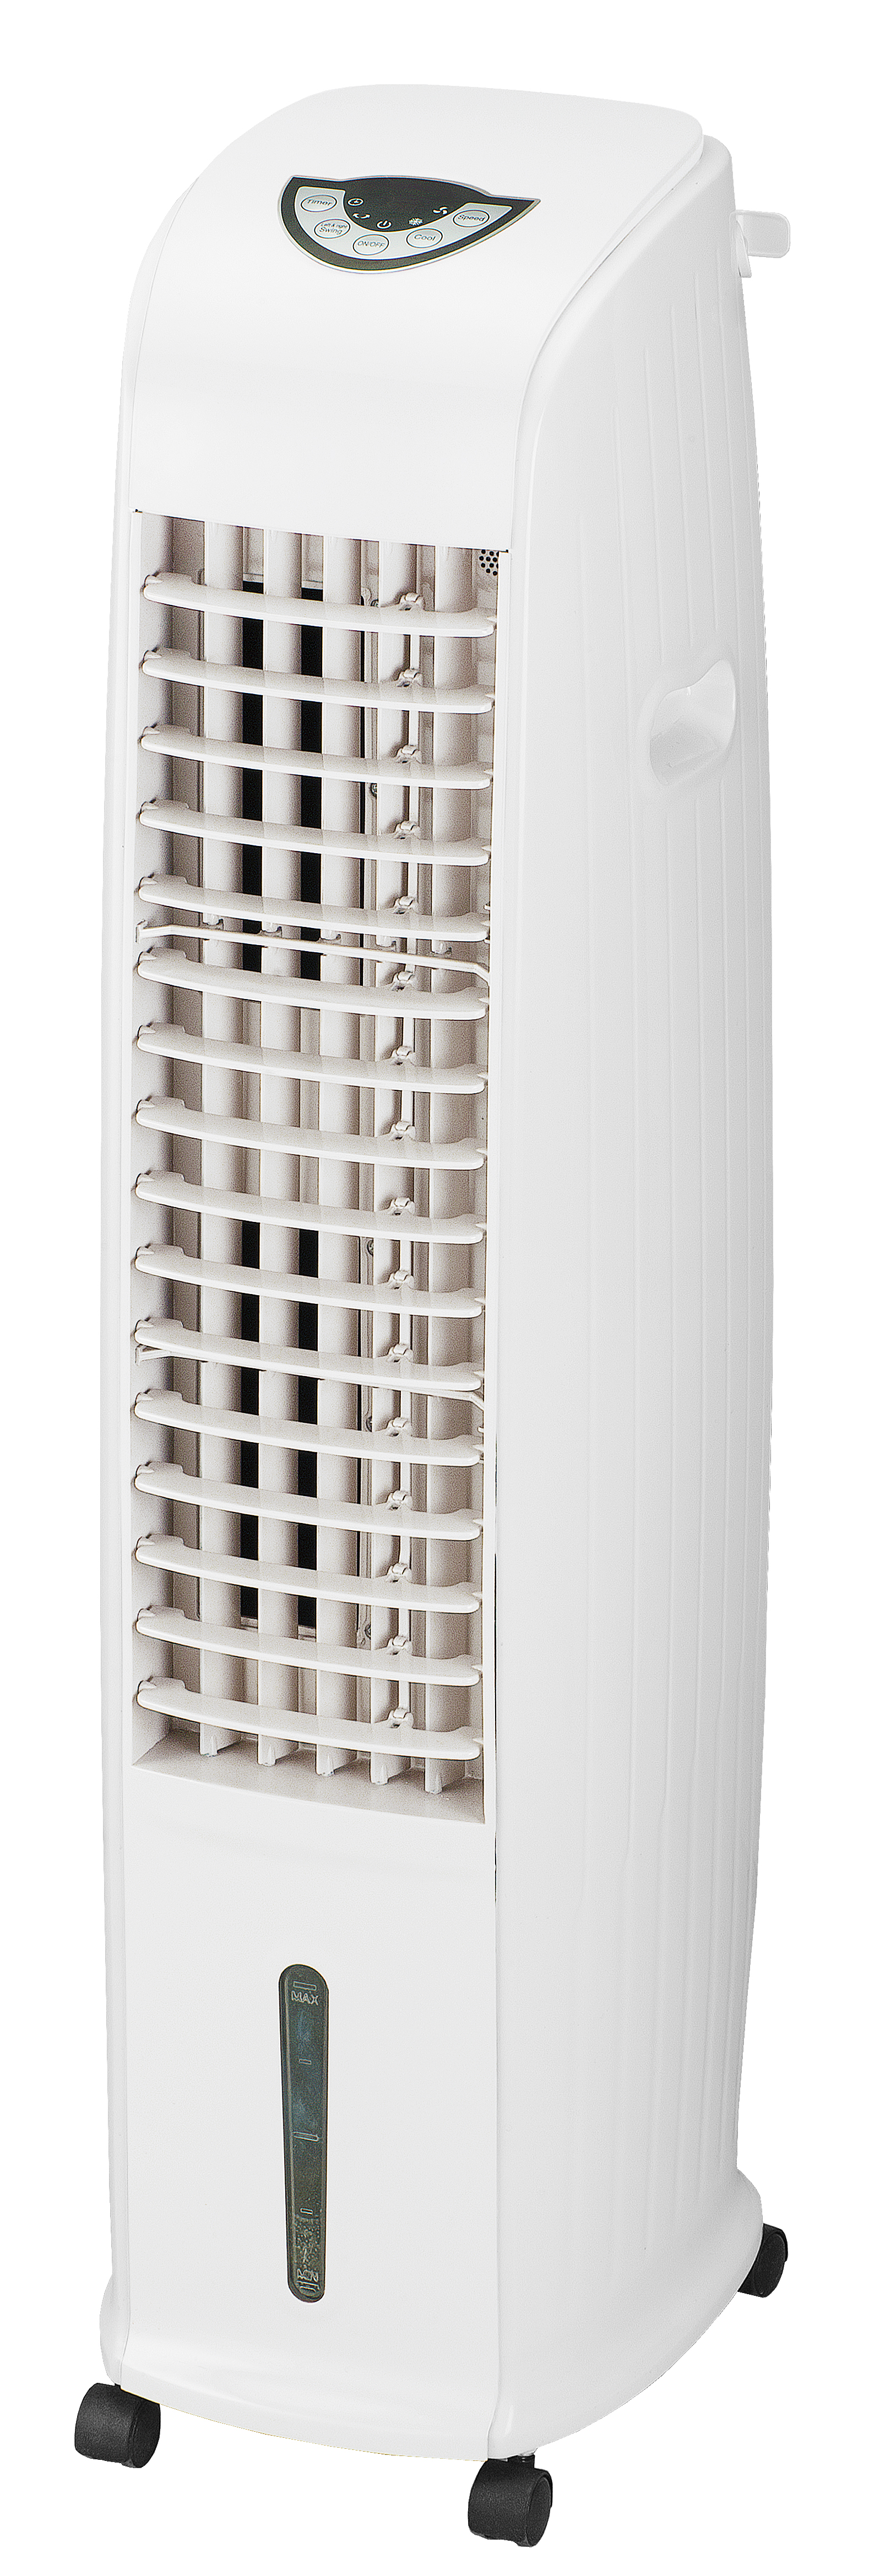 Leiser Ventilator, Verdunstungsluftkühler, 4-in-1 tragbarer Klimaanlagenventilator